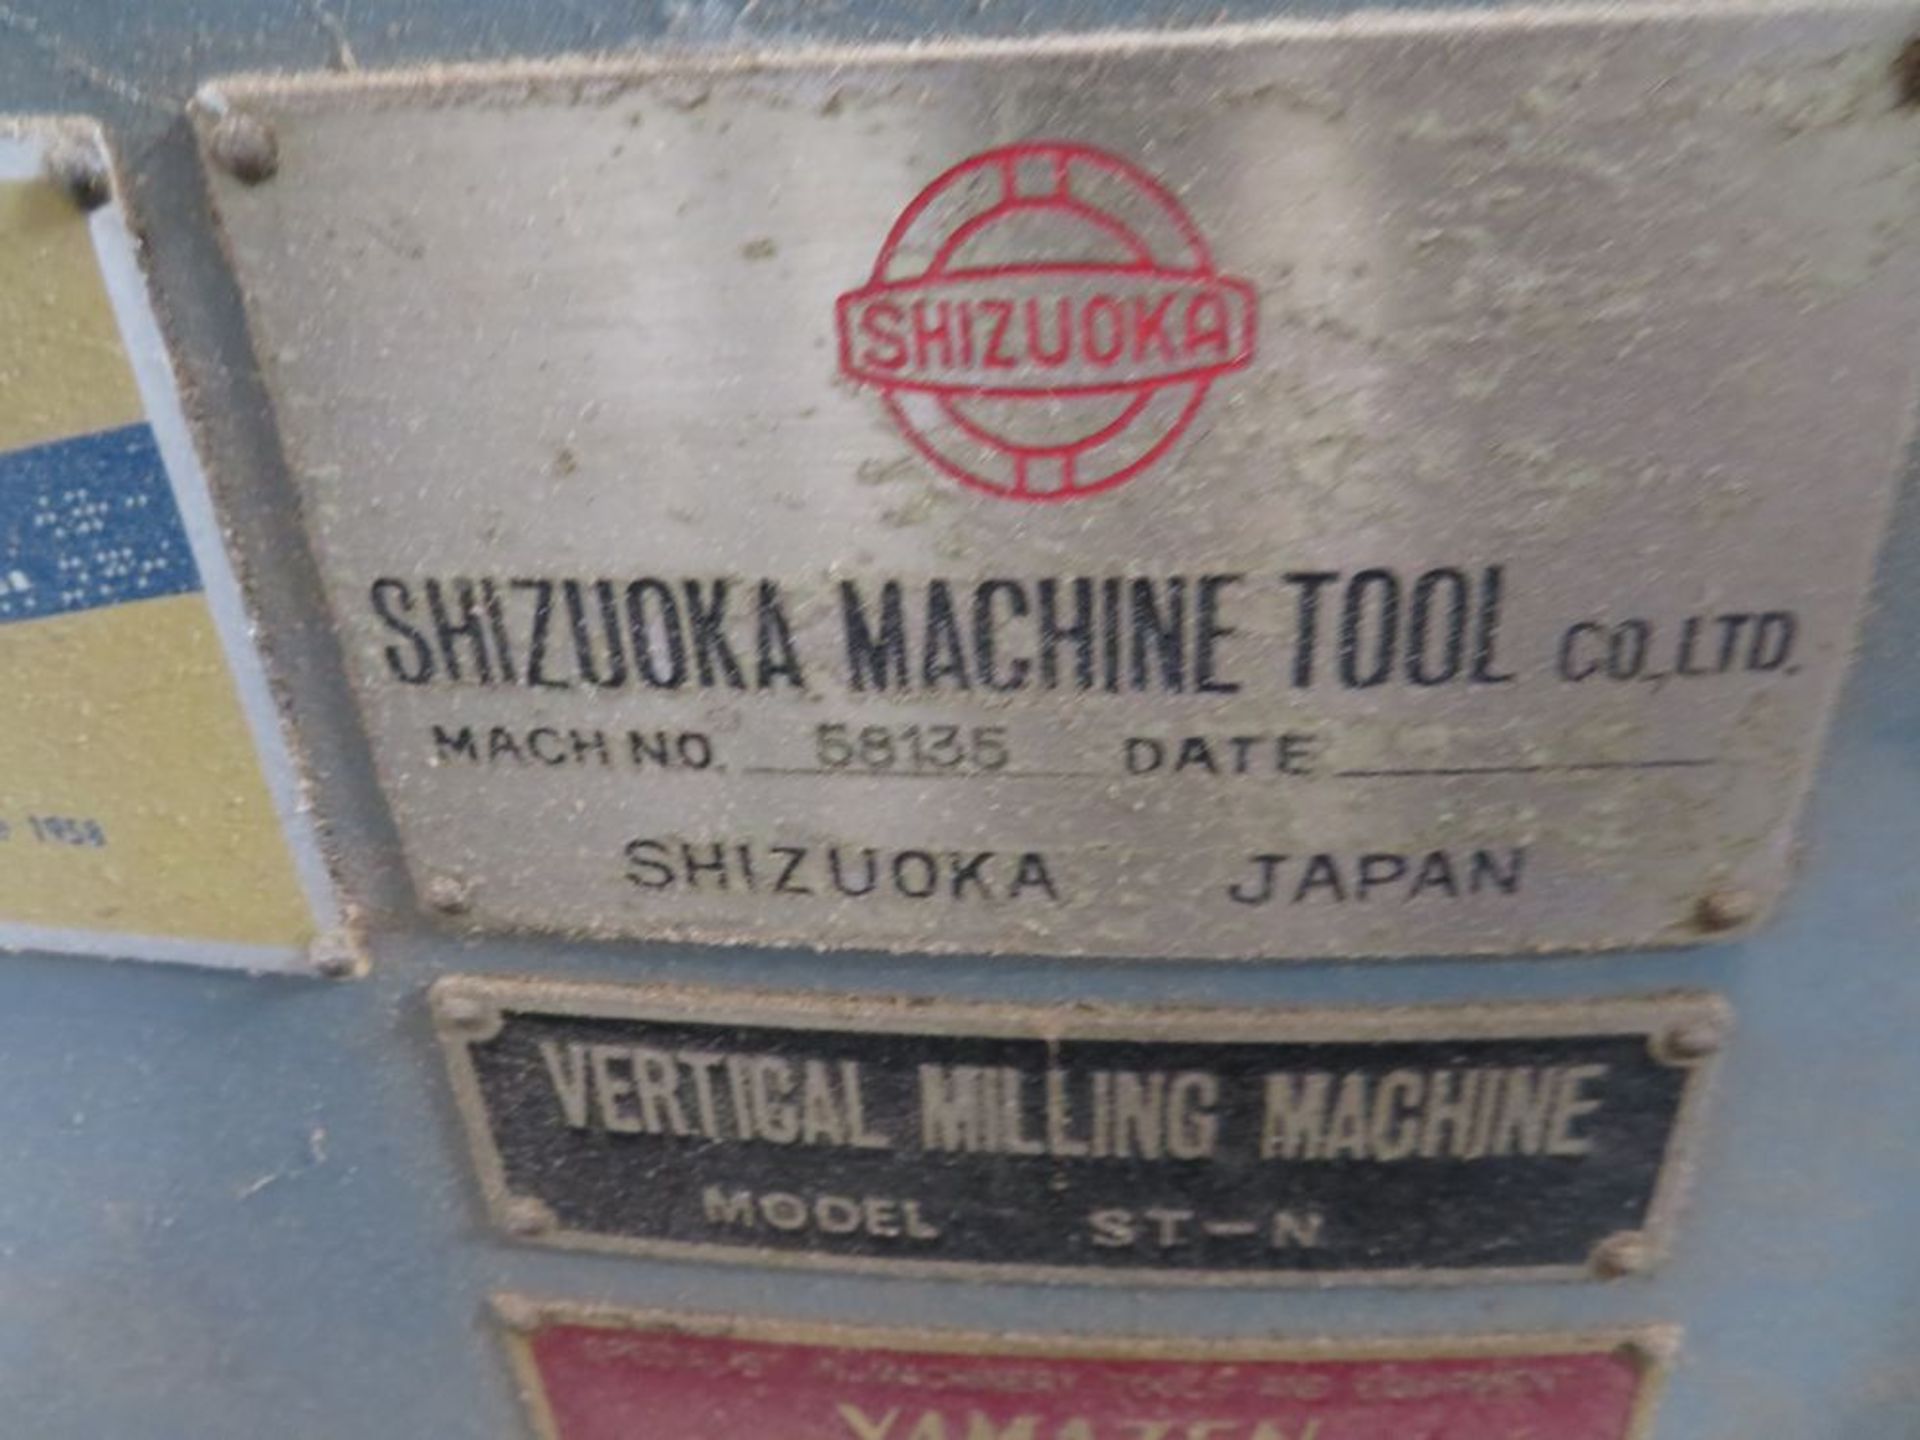 Shizuoko mod. ST-N, Vertical Milling Machine w/ Dana Summit DRO & Cabinet w/ Tooling - Image 4 of 5